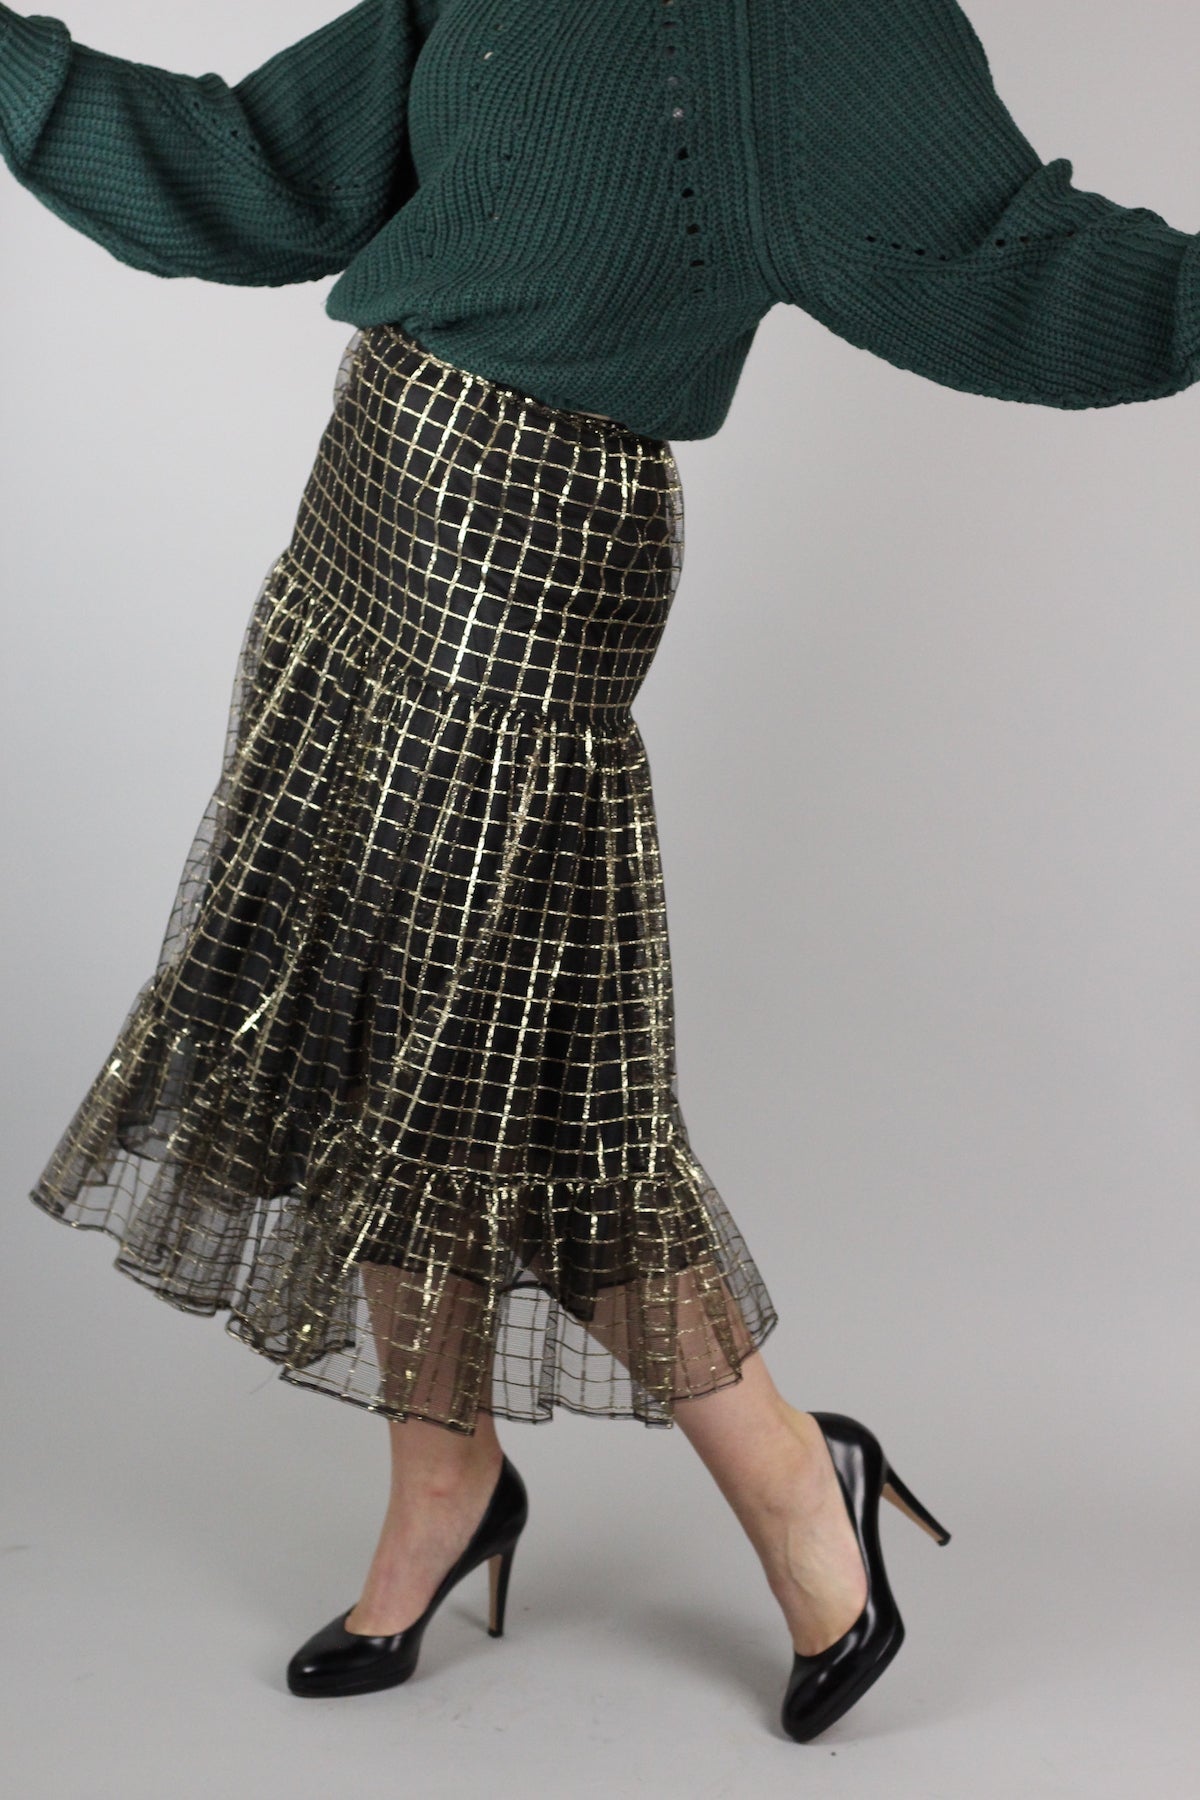 Vintage Anna Sui Lurex Tulle Skirt